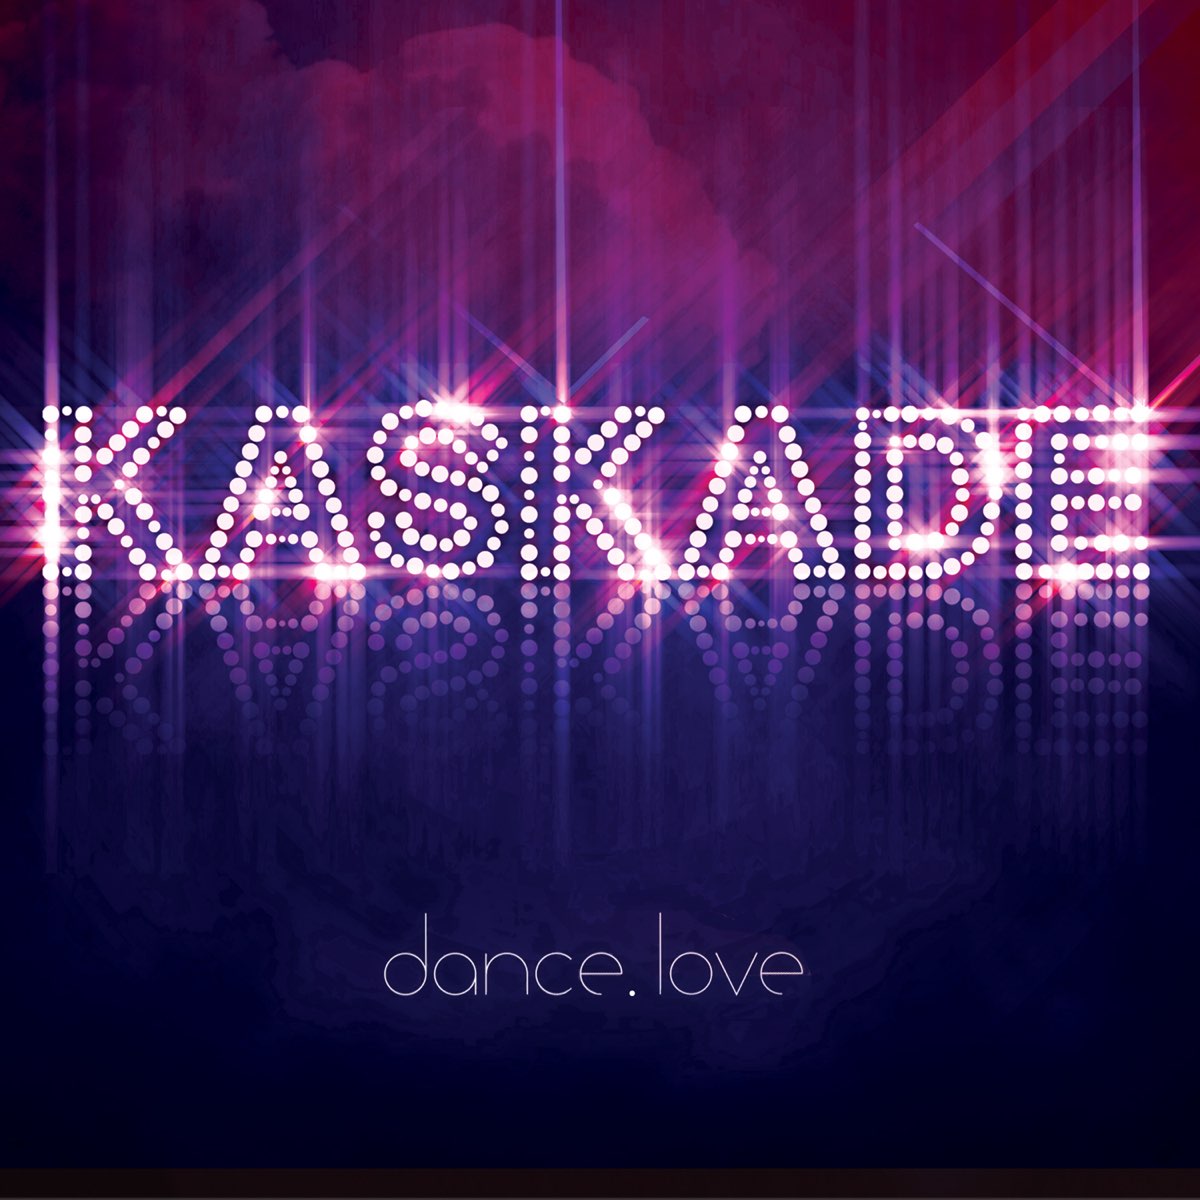 Love dance music. Love Dance. Картинка i Love Dance. Kaskade feat Haley Dynasty.